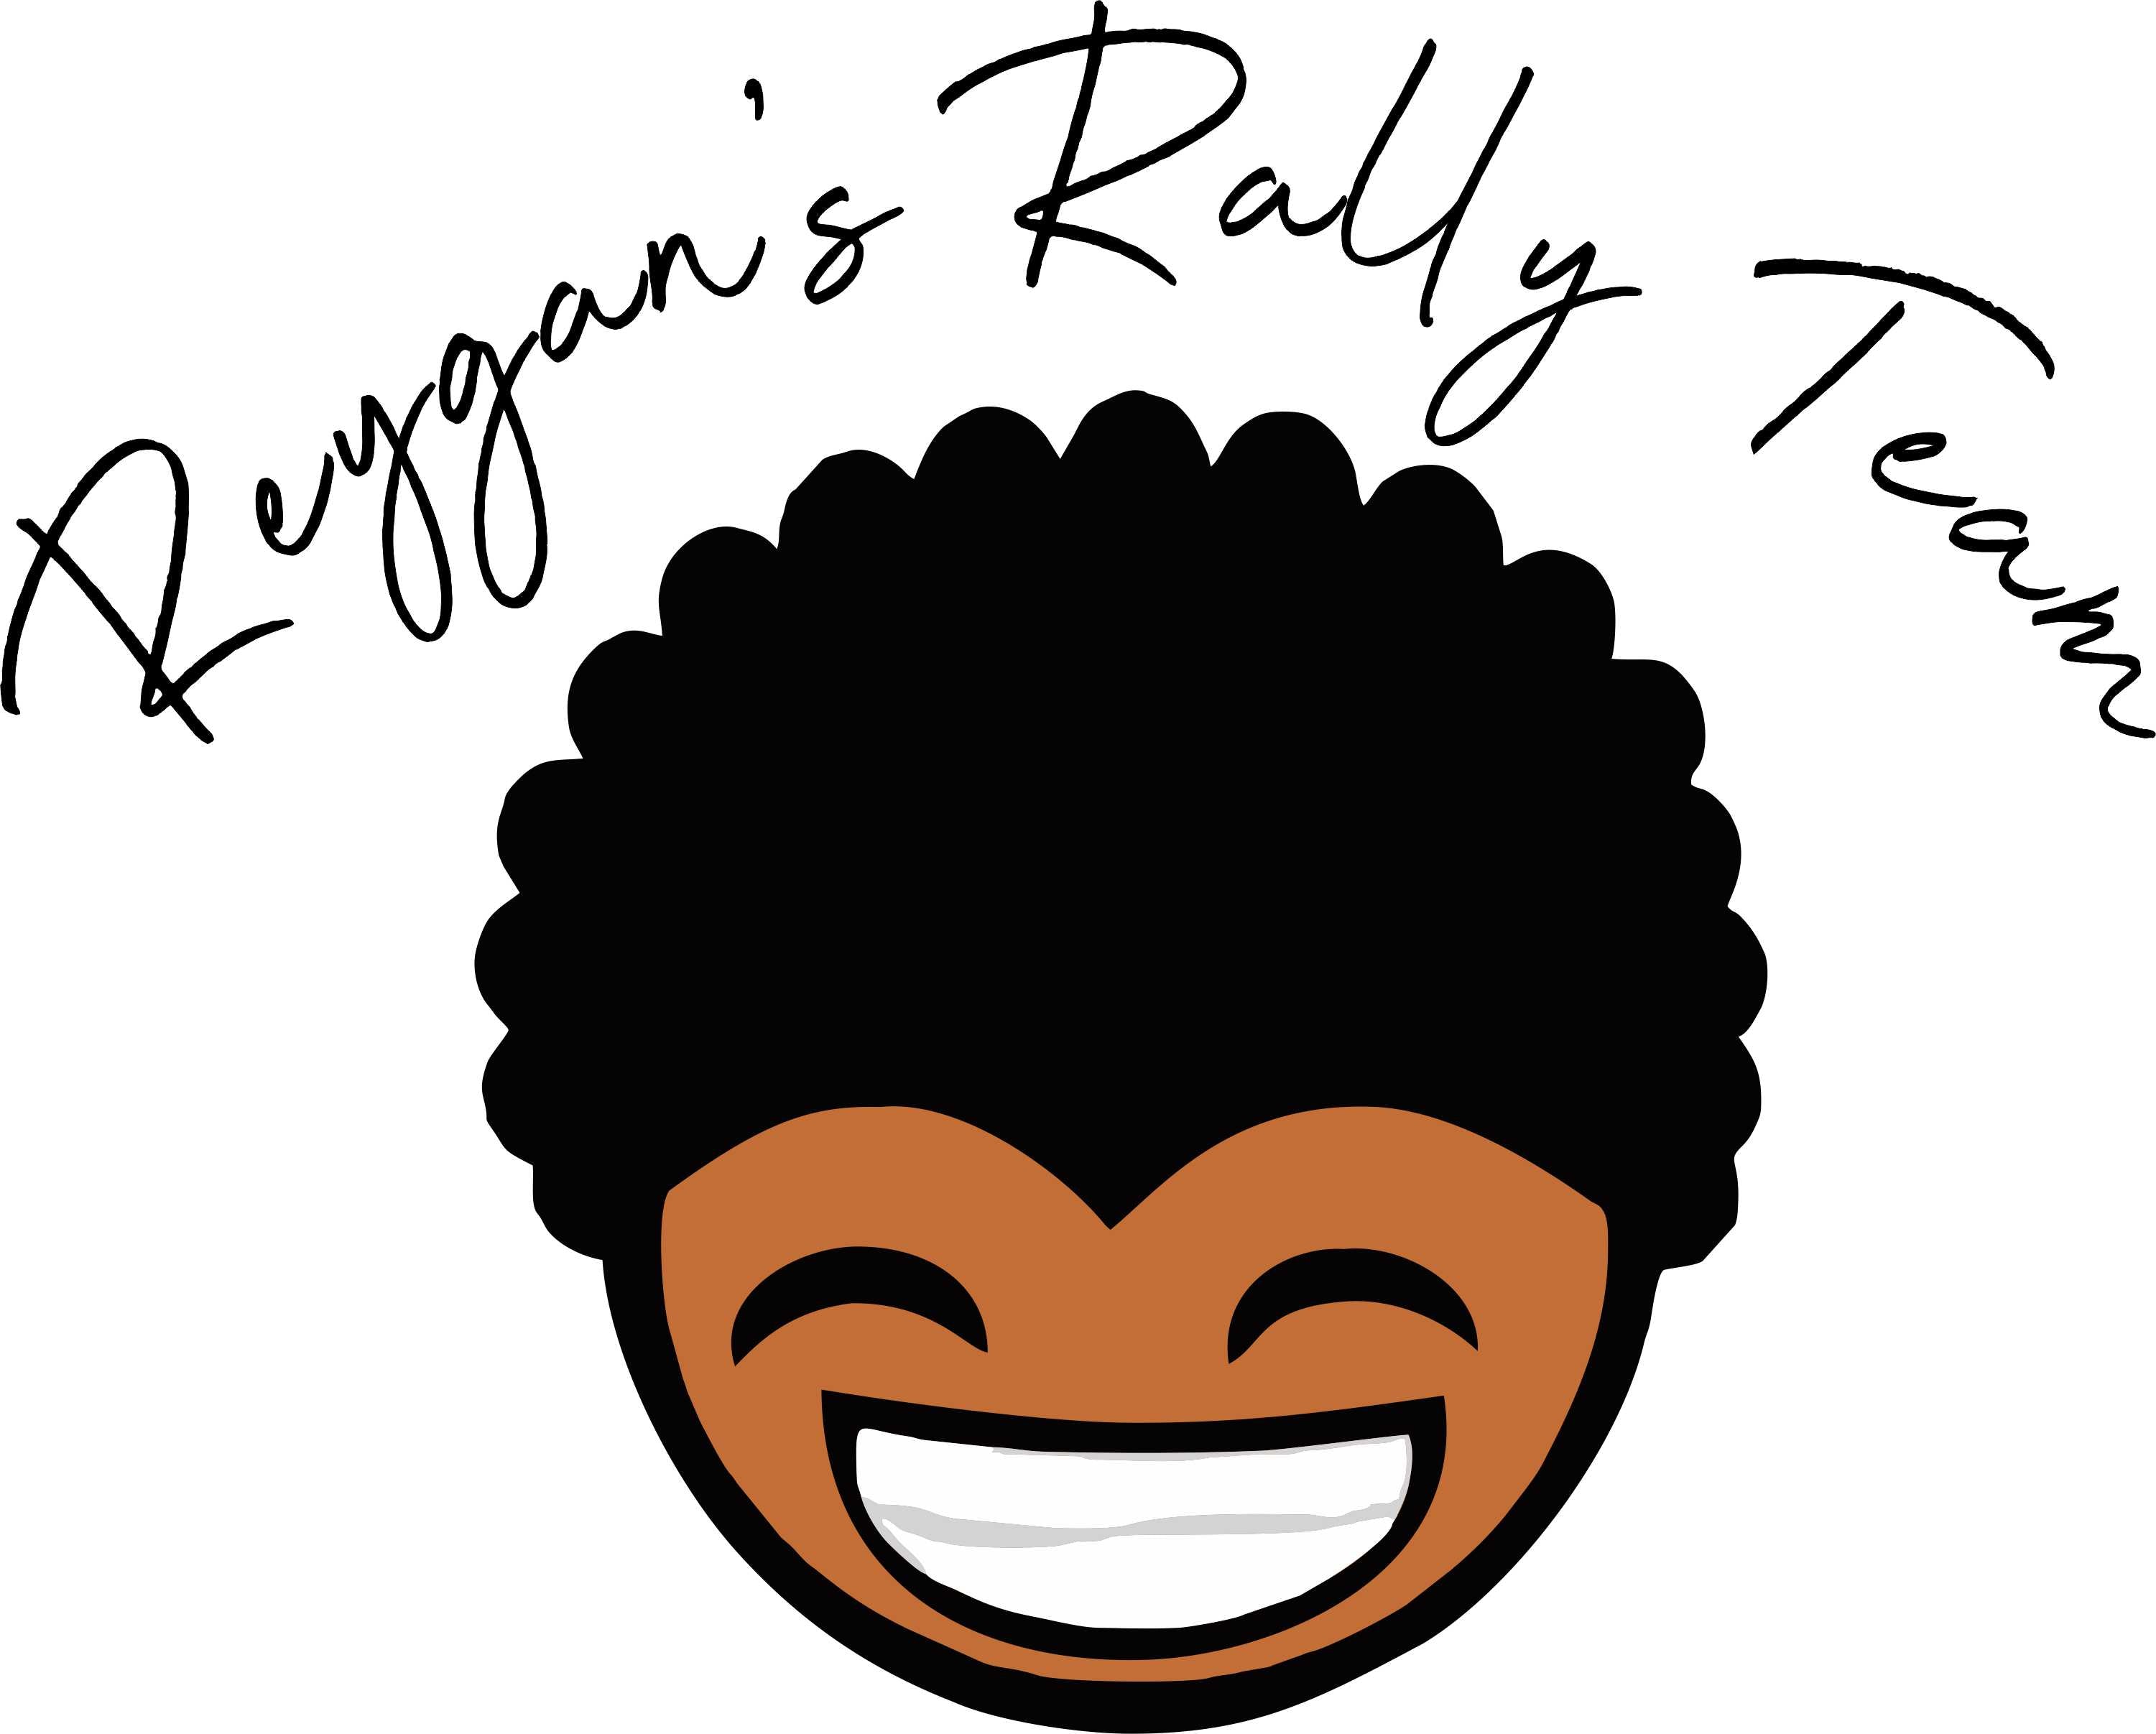 Reygan's Rally Team